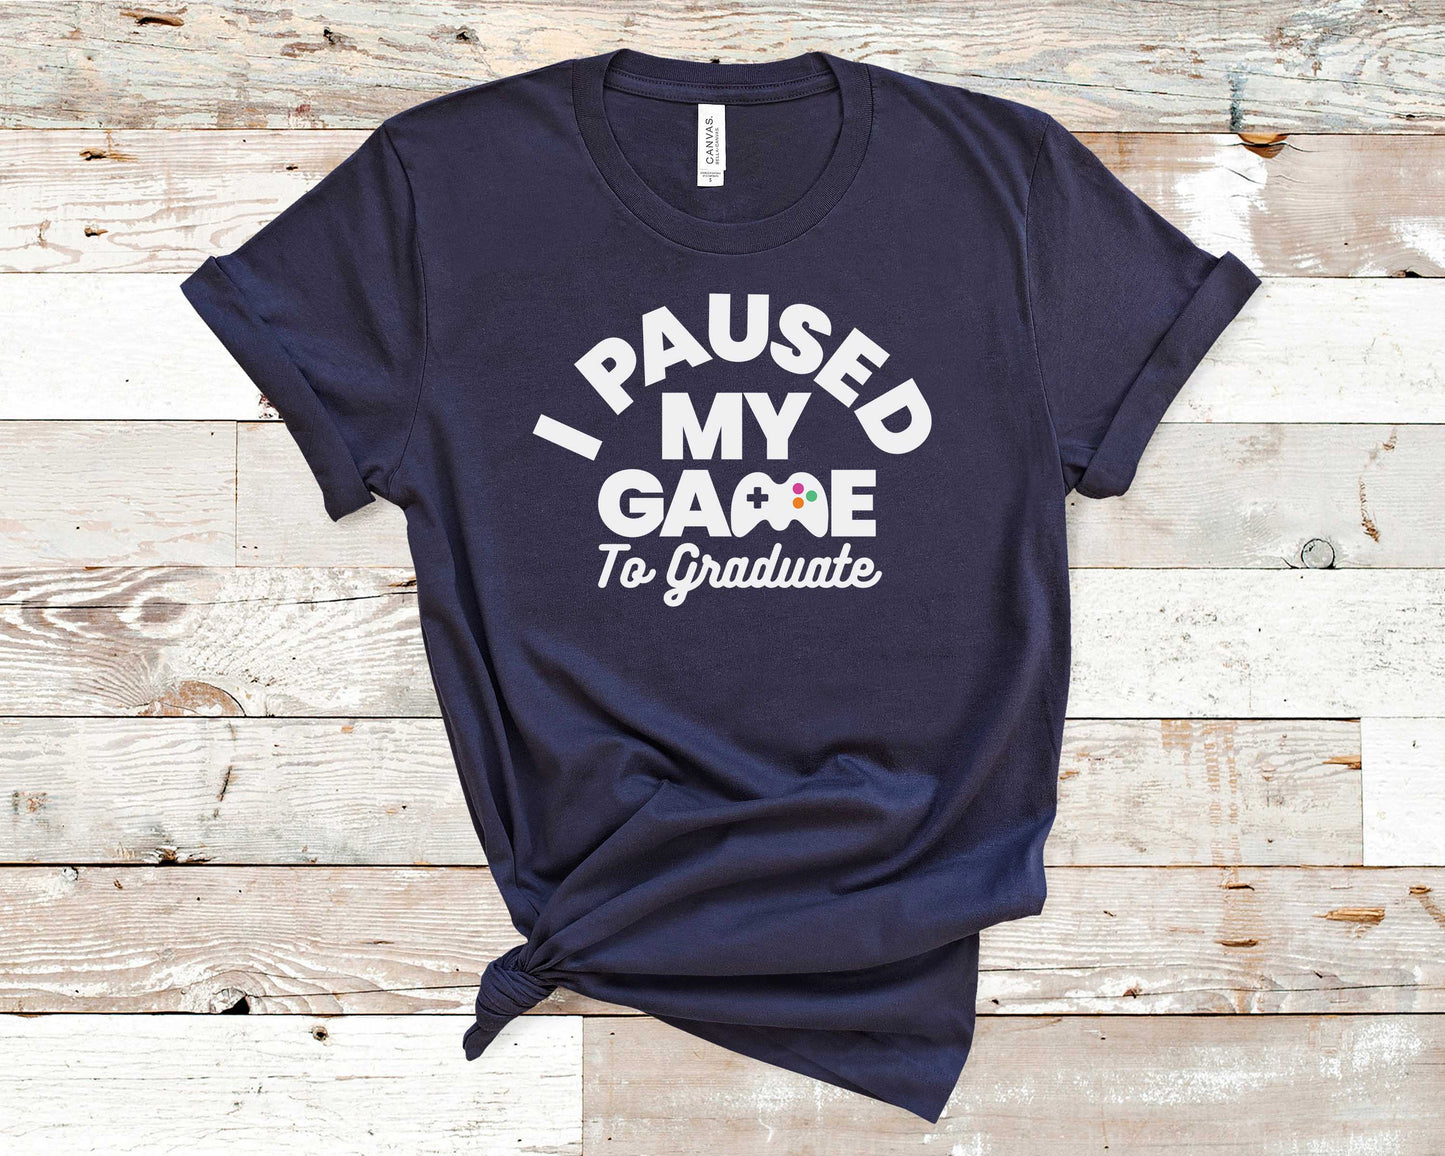 I Paused My Game to Graduate - Graduation